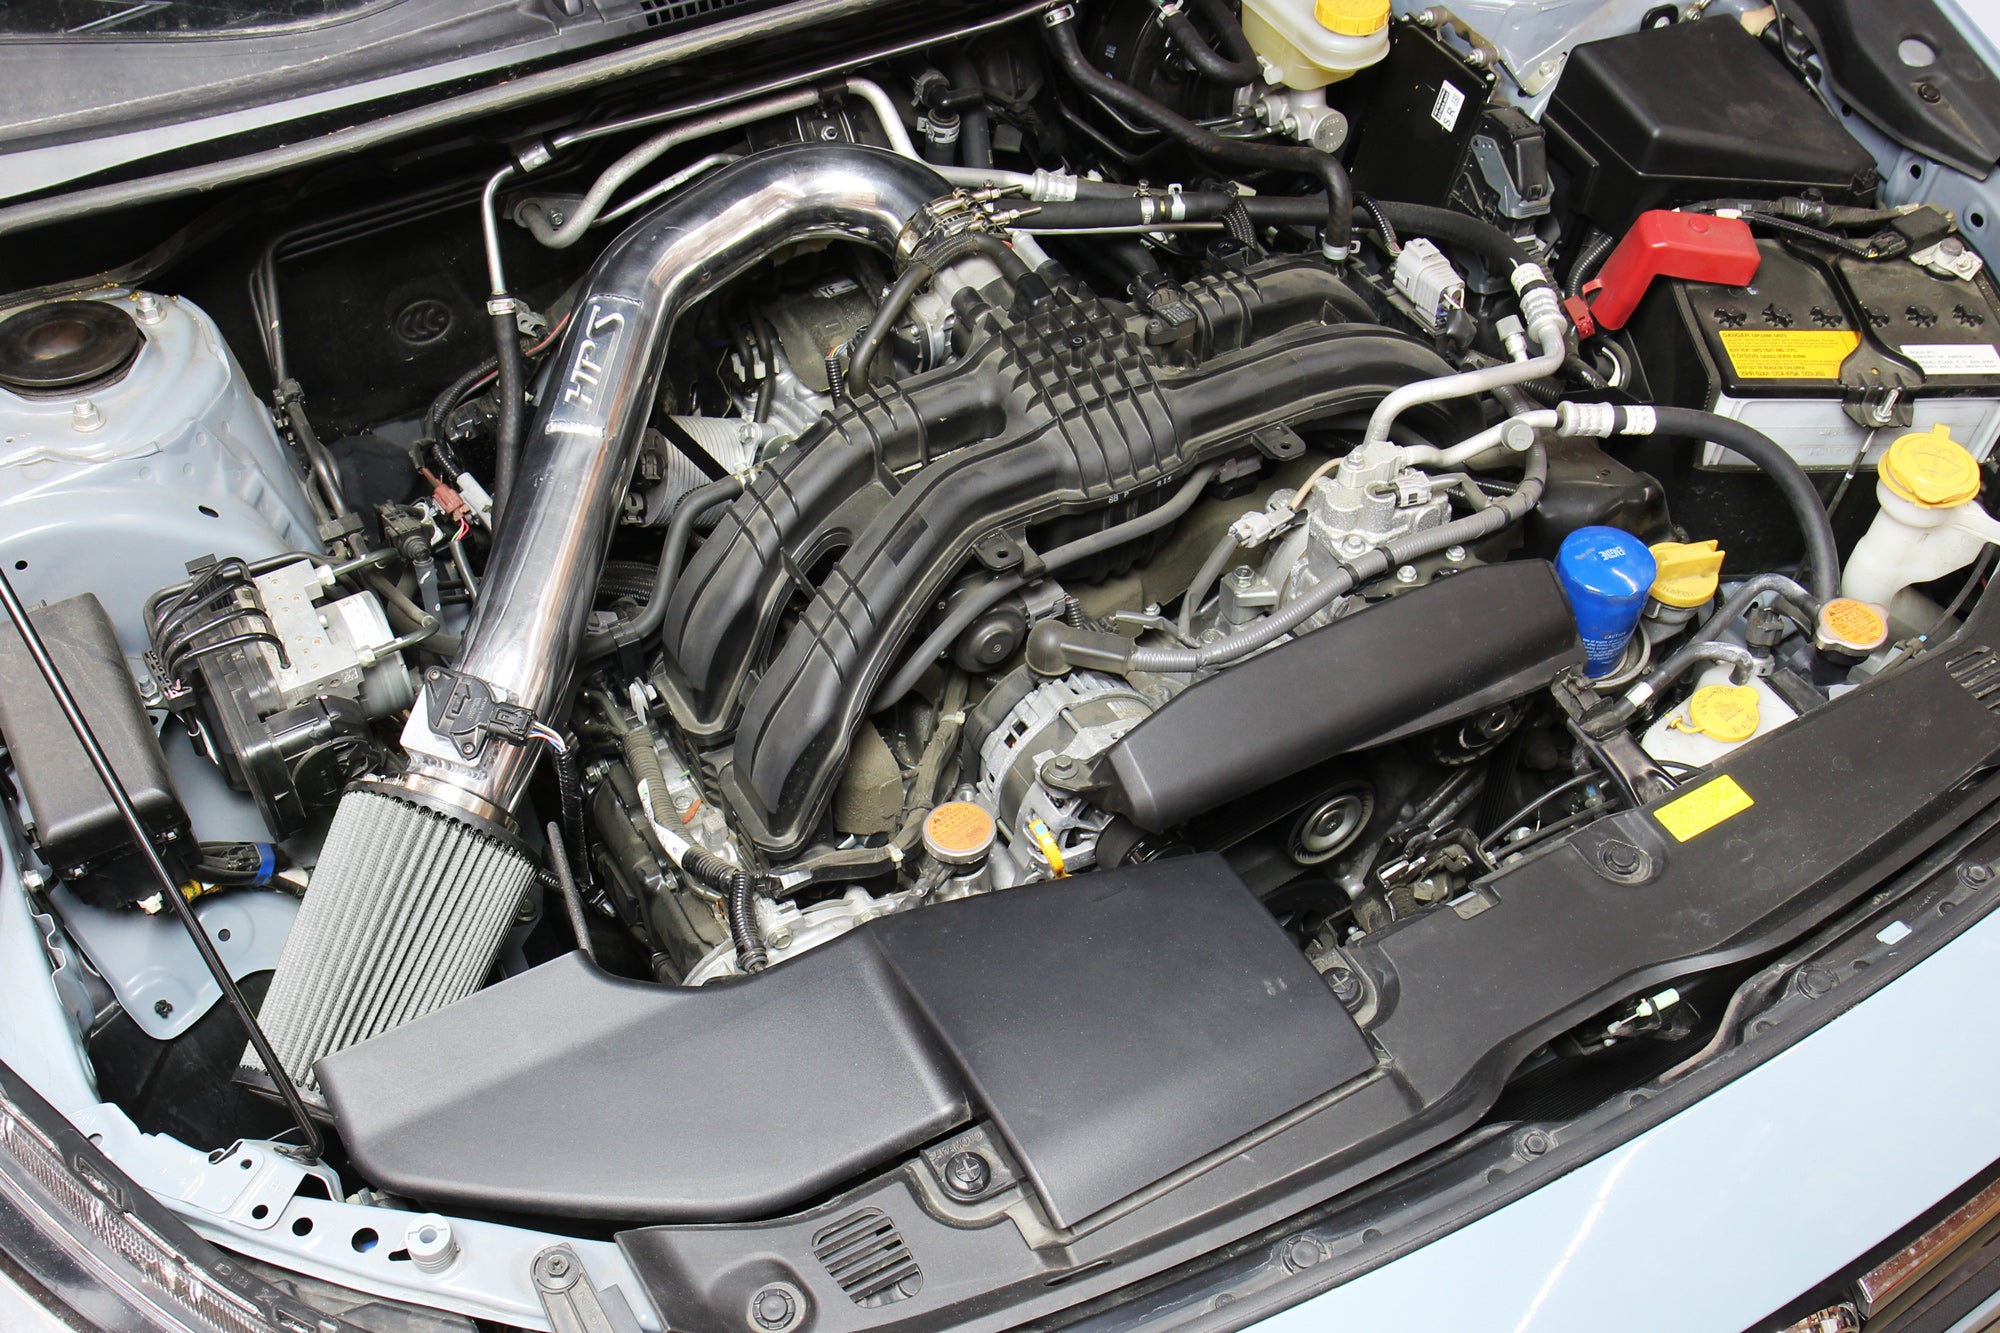 HPS Cold Air Intake Kit with Heat Shield Installed on Subaru 2017-2022 Impreza 2.0L Non Turbo, 827-684